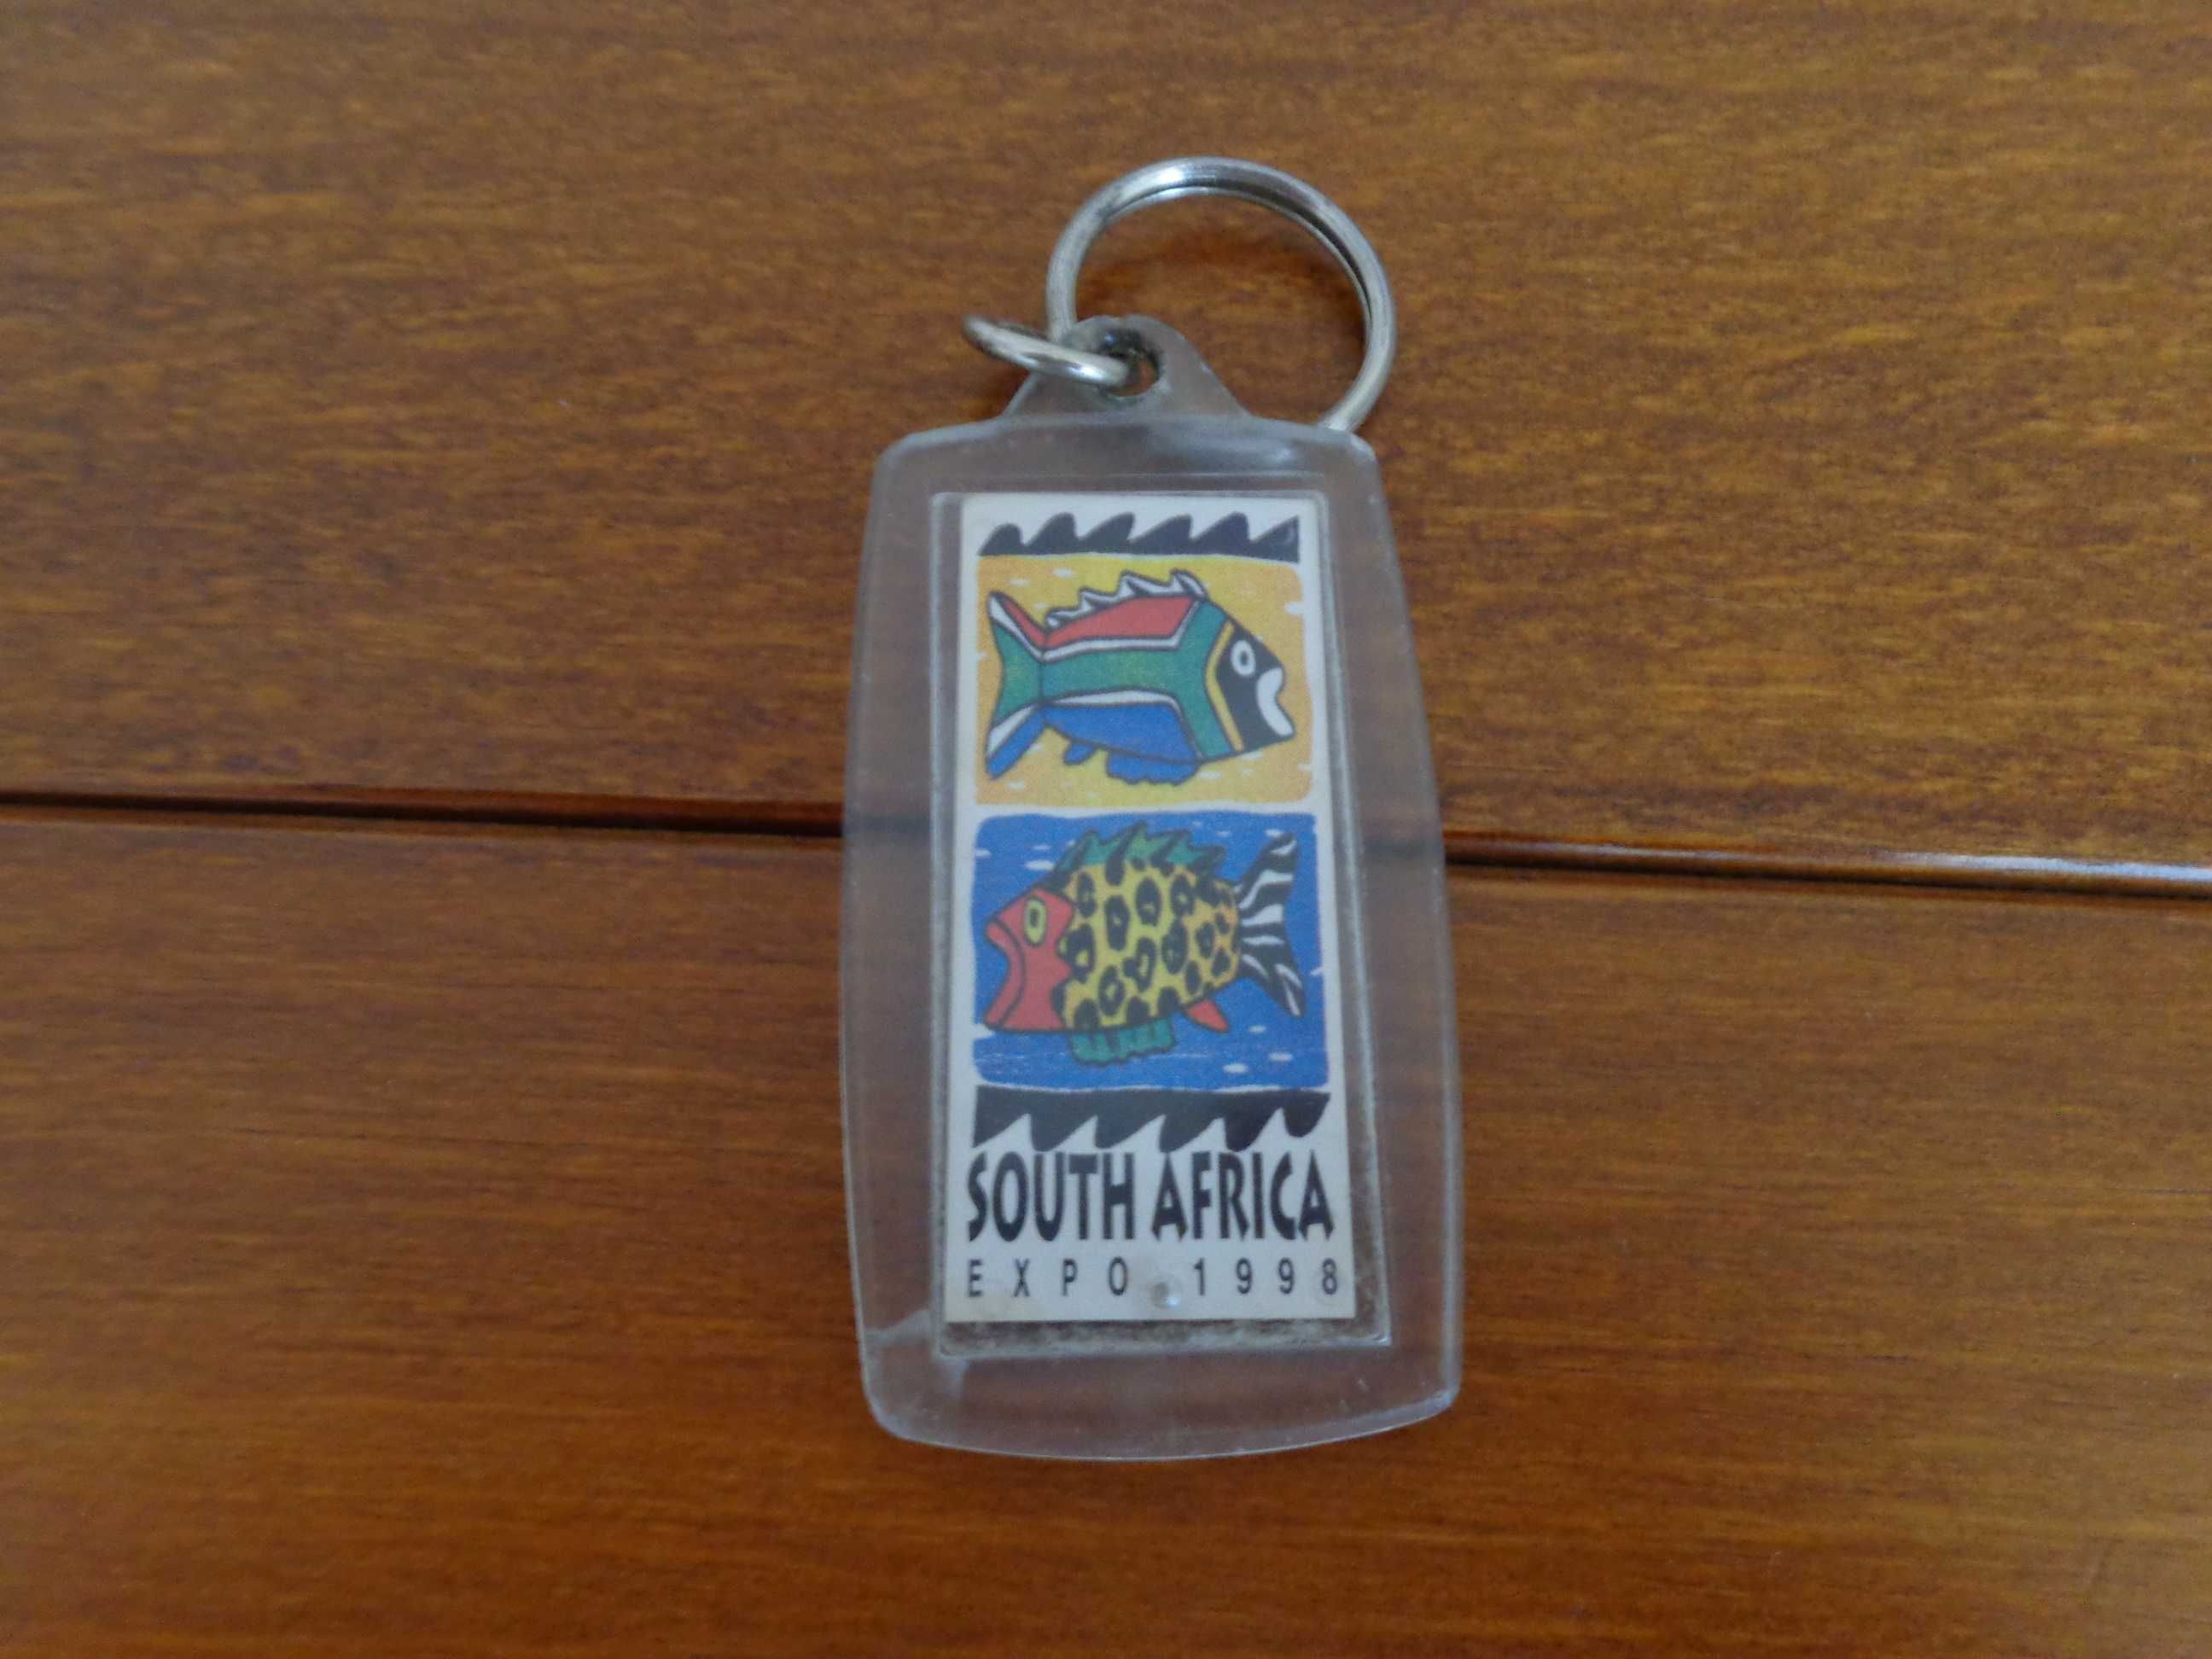 Porta - chaves Expo 98, para colecionadores